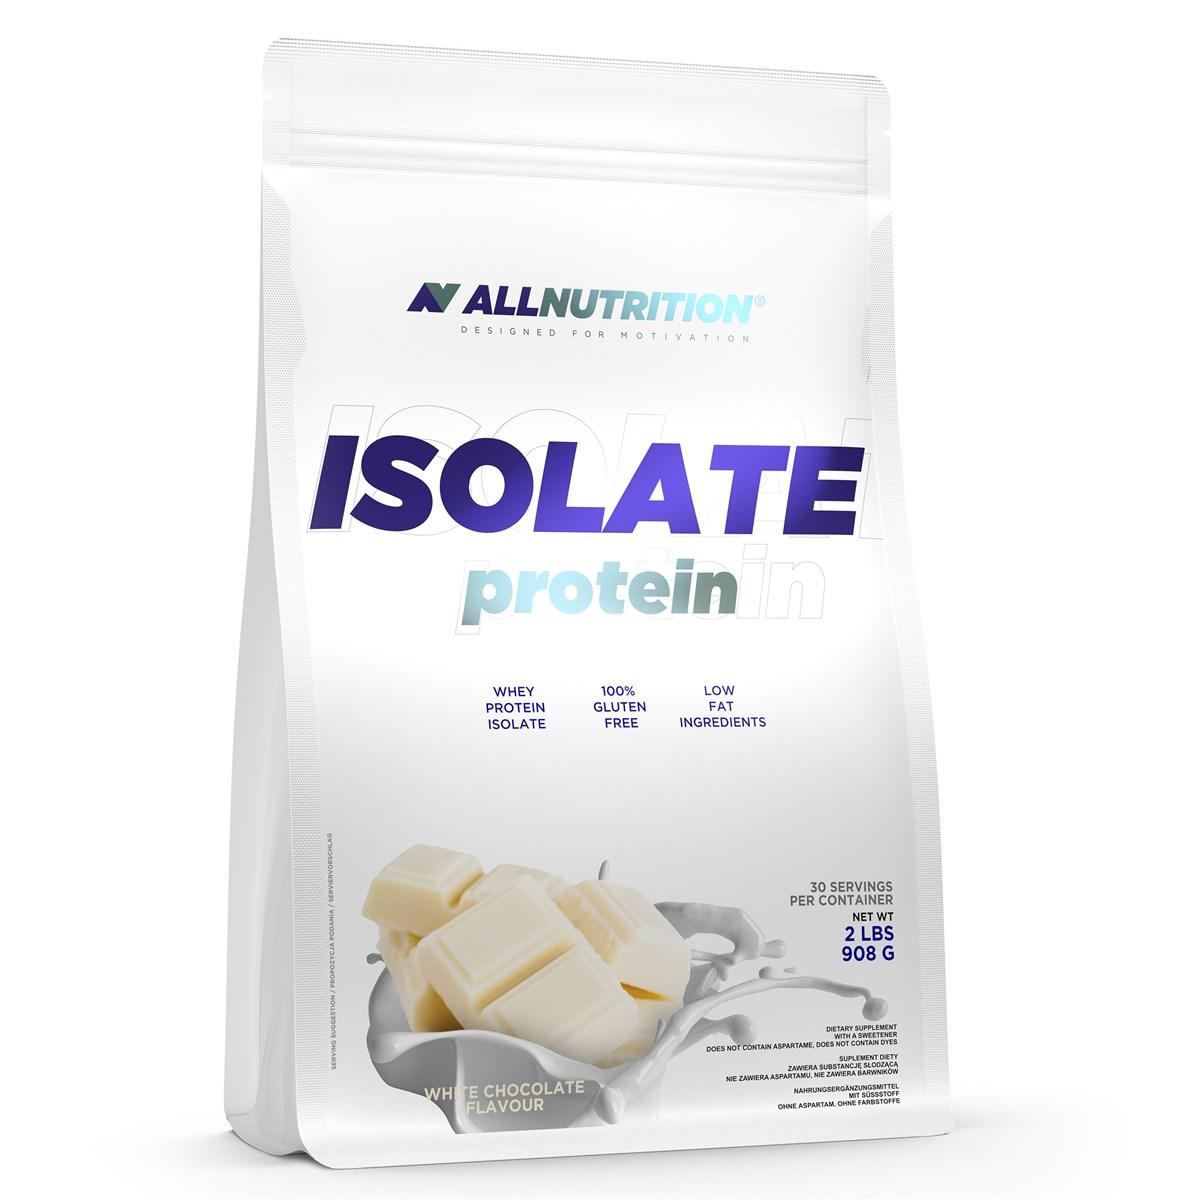 Сывороточный протеин изолят AllNutrition Isolate Protein (908 г) алл нутришн White Chocolate Raspberry,  мл, AllNutrition. Сывороточный изолят